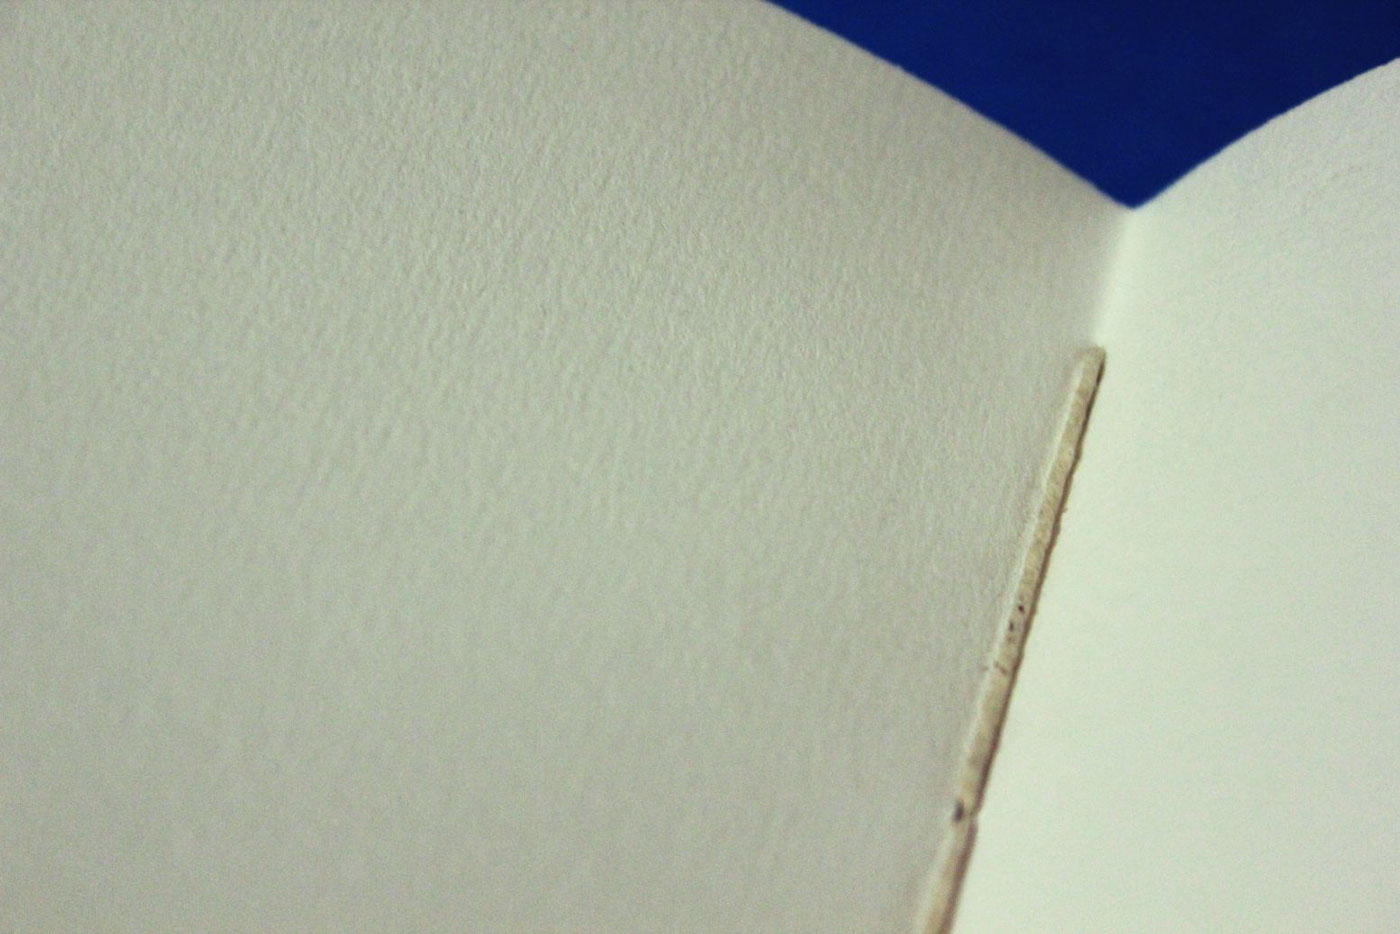 coptic notebook handbound RECYCLED upcycled handmade ecofriendly stitches print illustrations ink